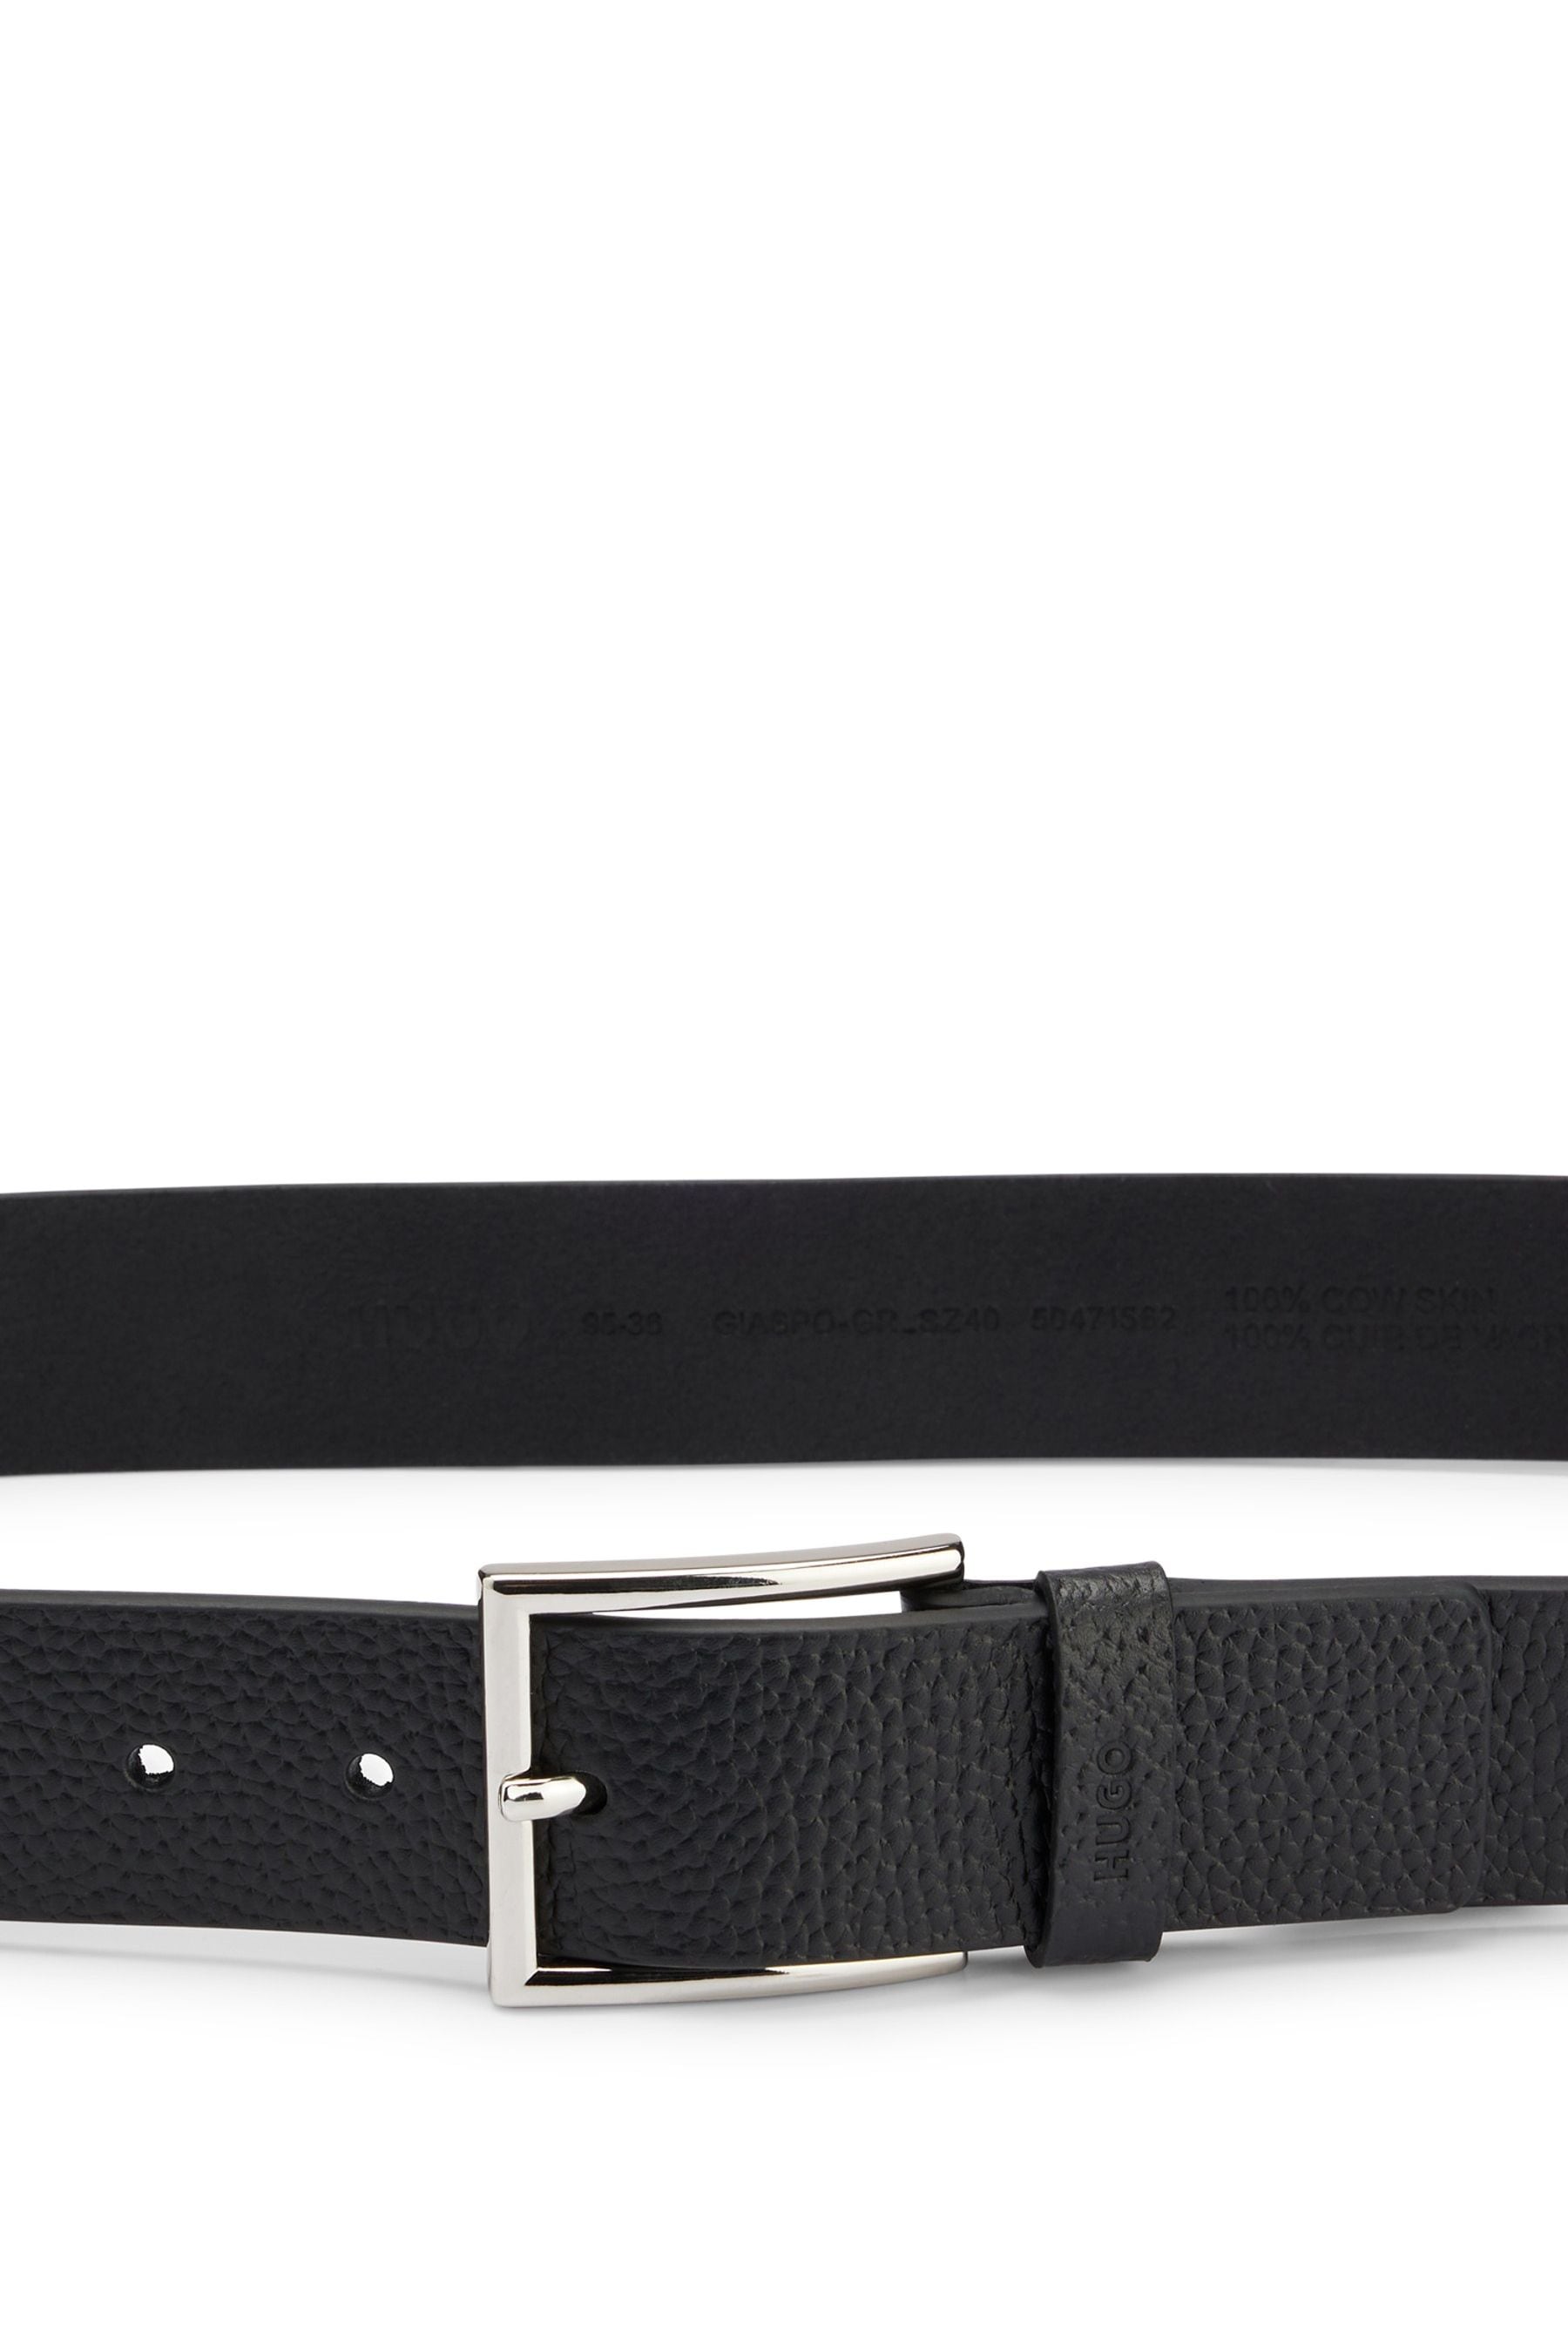 Buy HUGO Giaspo Black Belt from the Next UK online shop